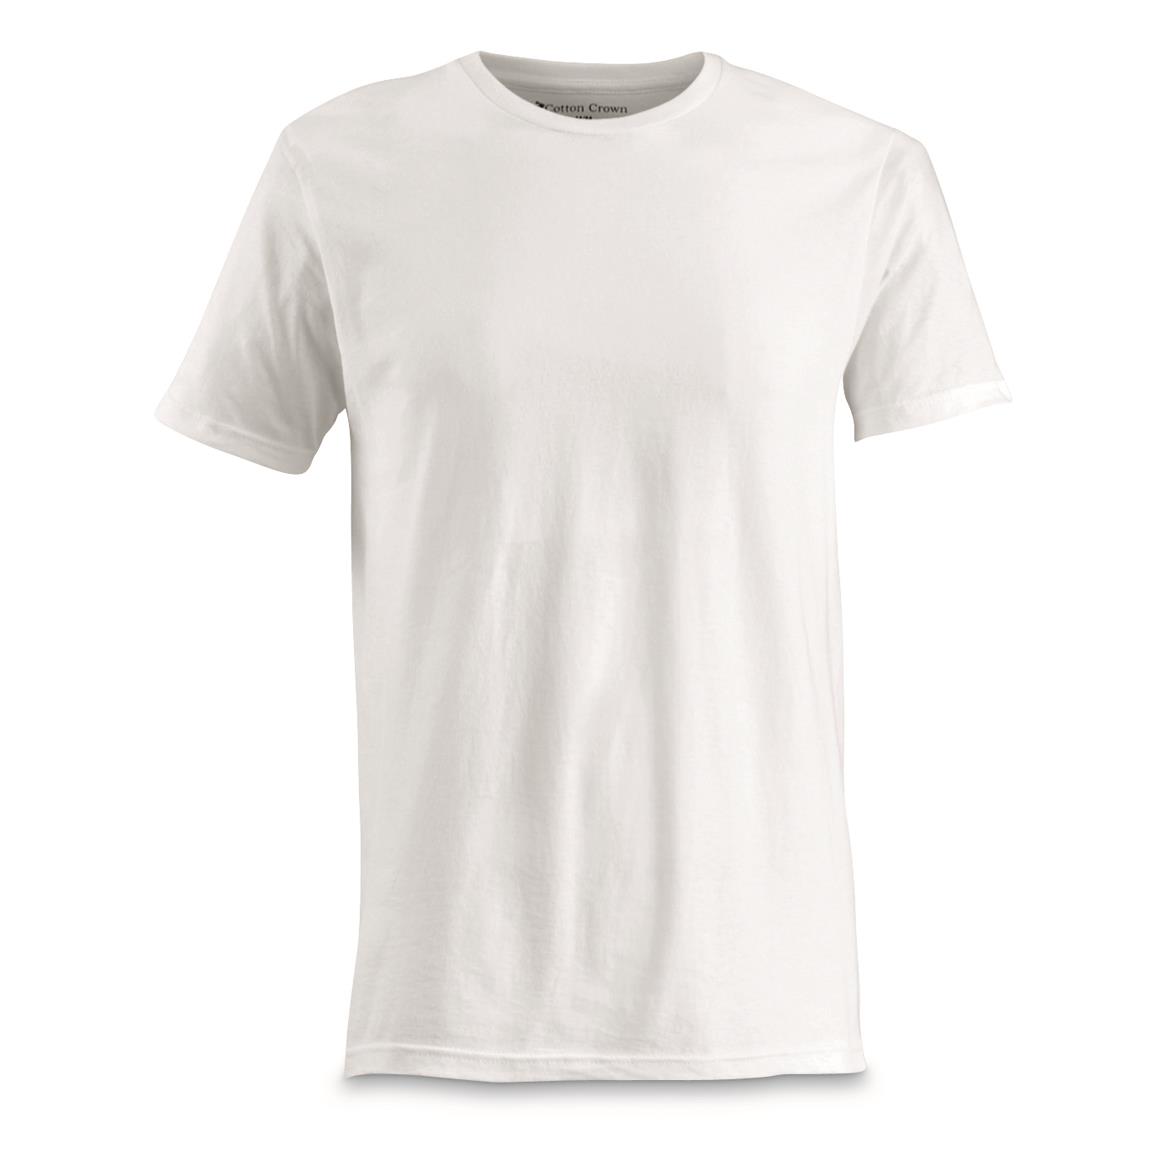 U.S. Municipal Surplus Cotton Crew Neck T-shirts, 3 Pack, New, White